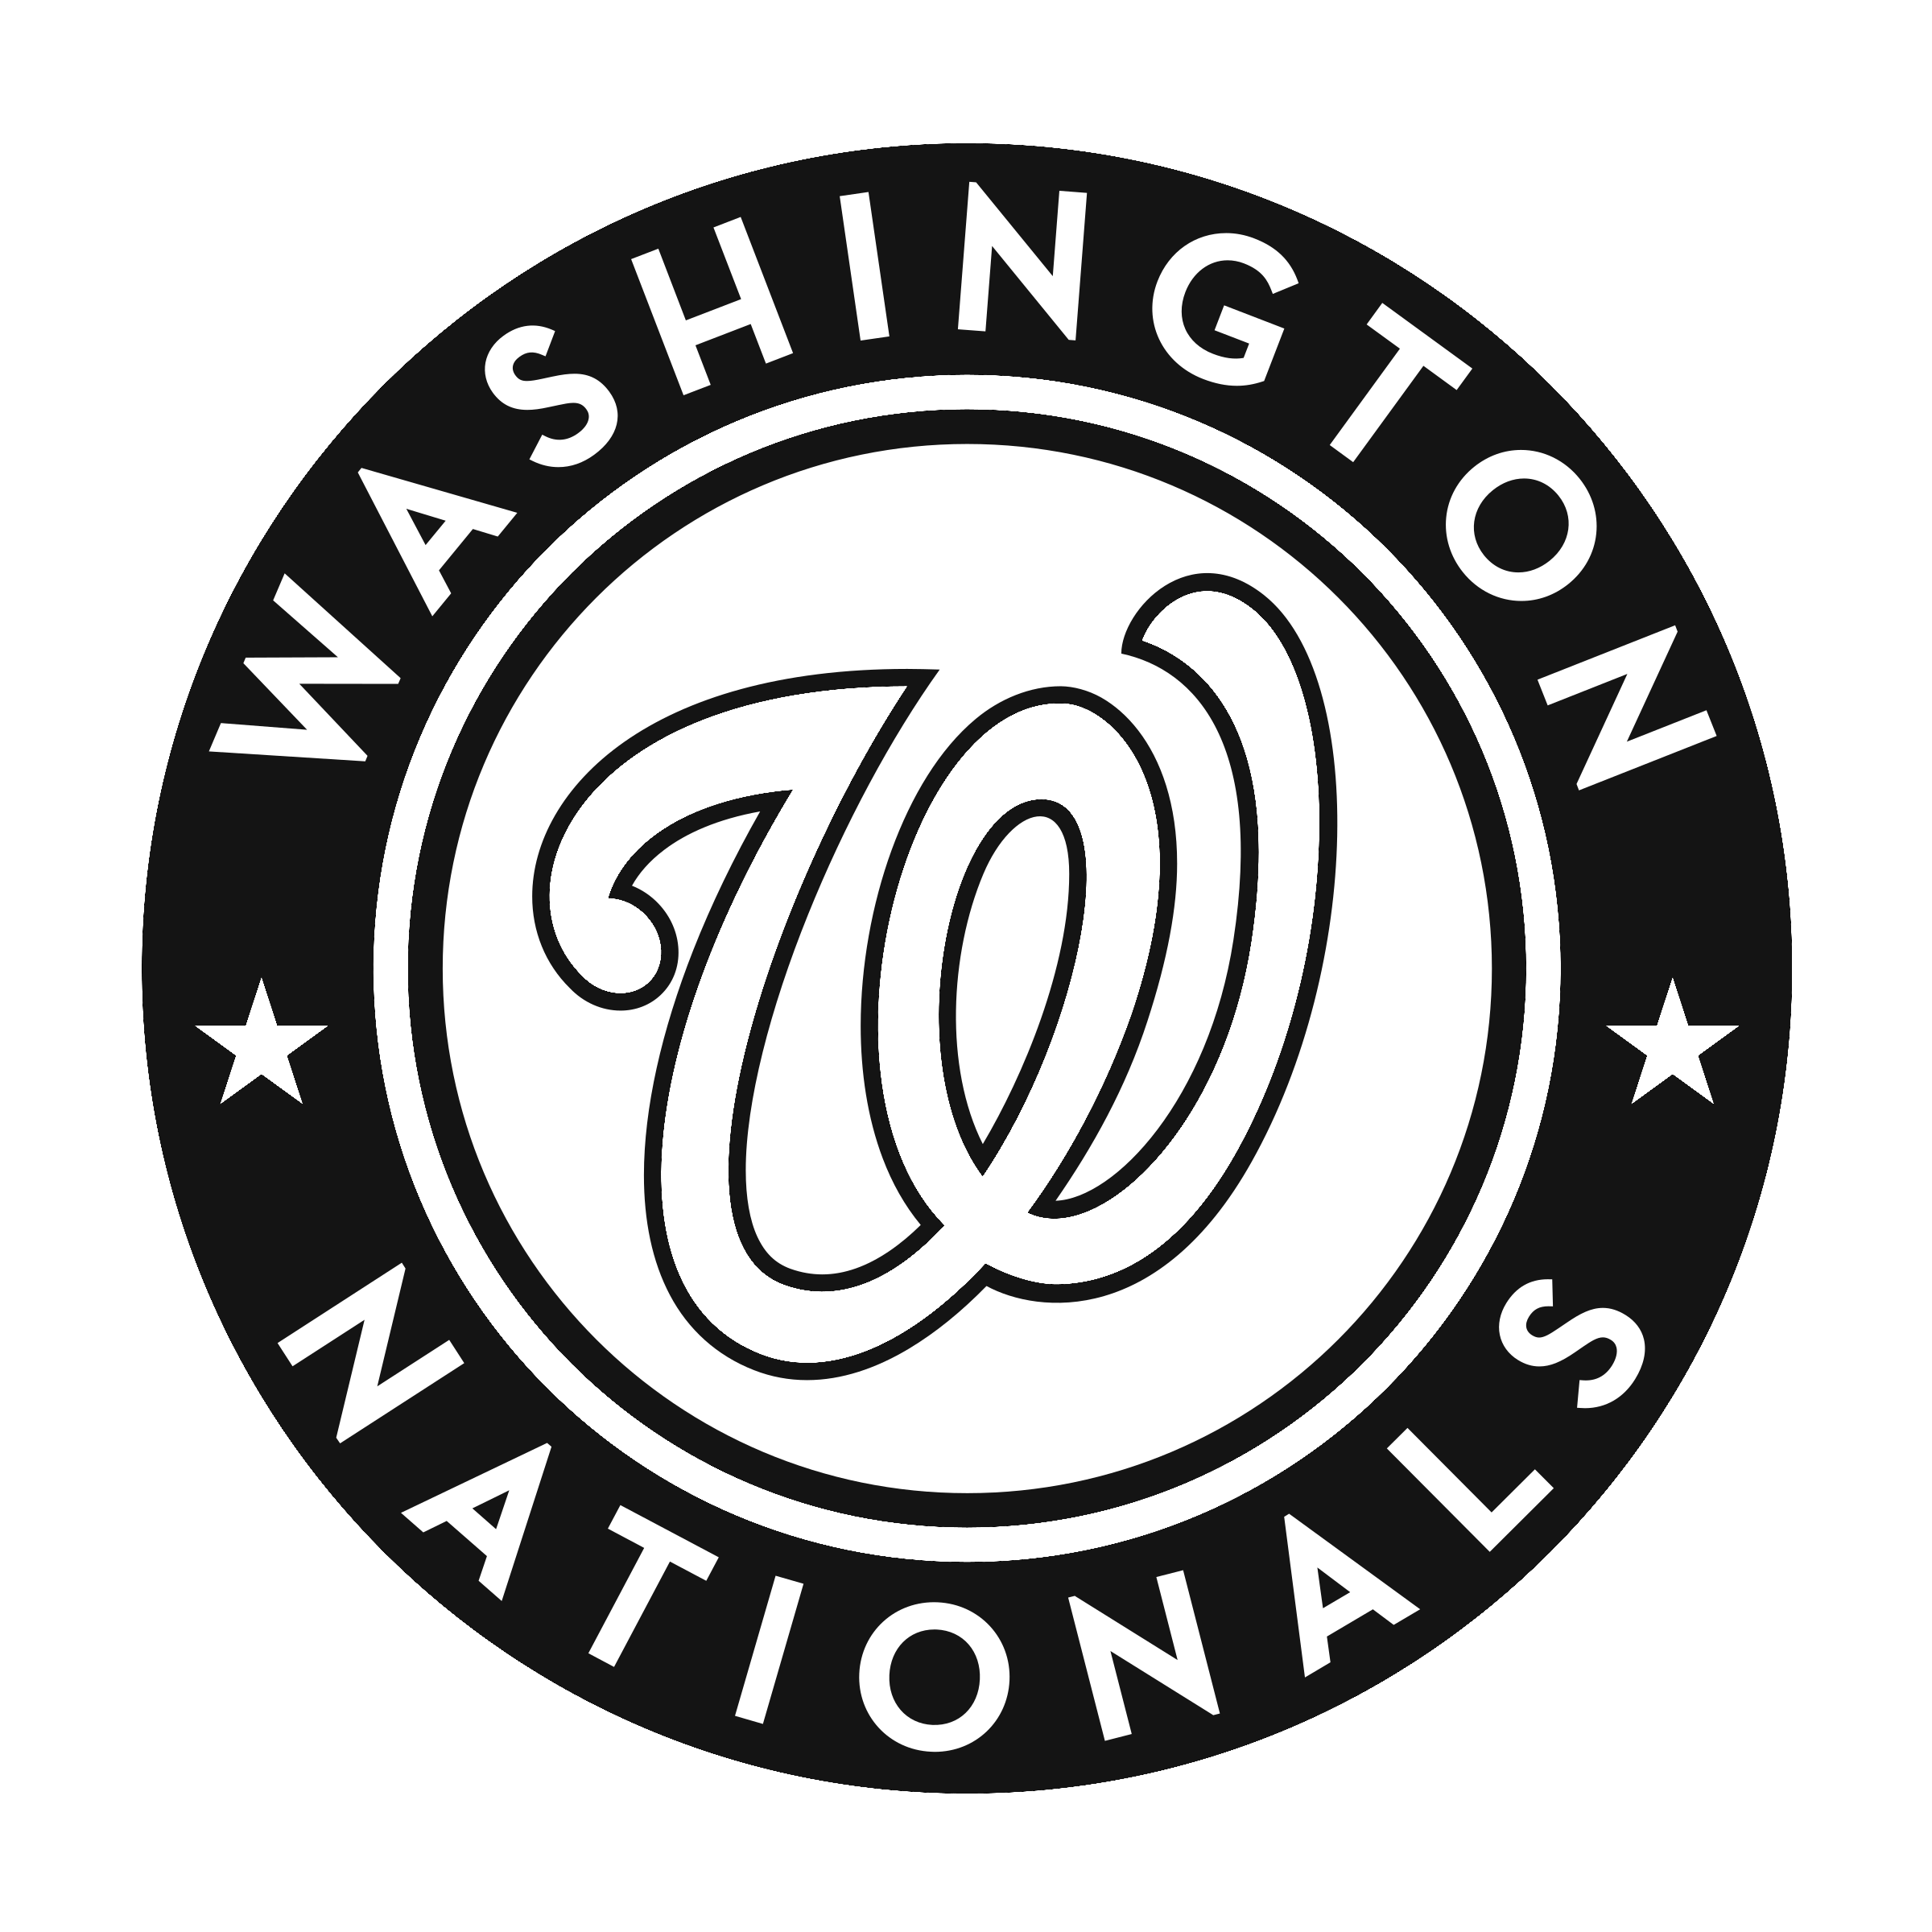 Washington Nationals Logo - Washington Nationals Logo PNG Transparent & SVG Vector